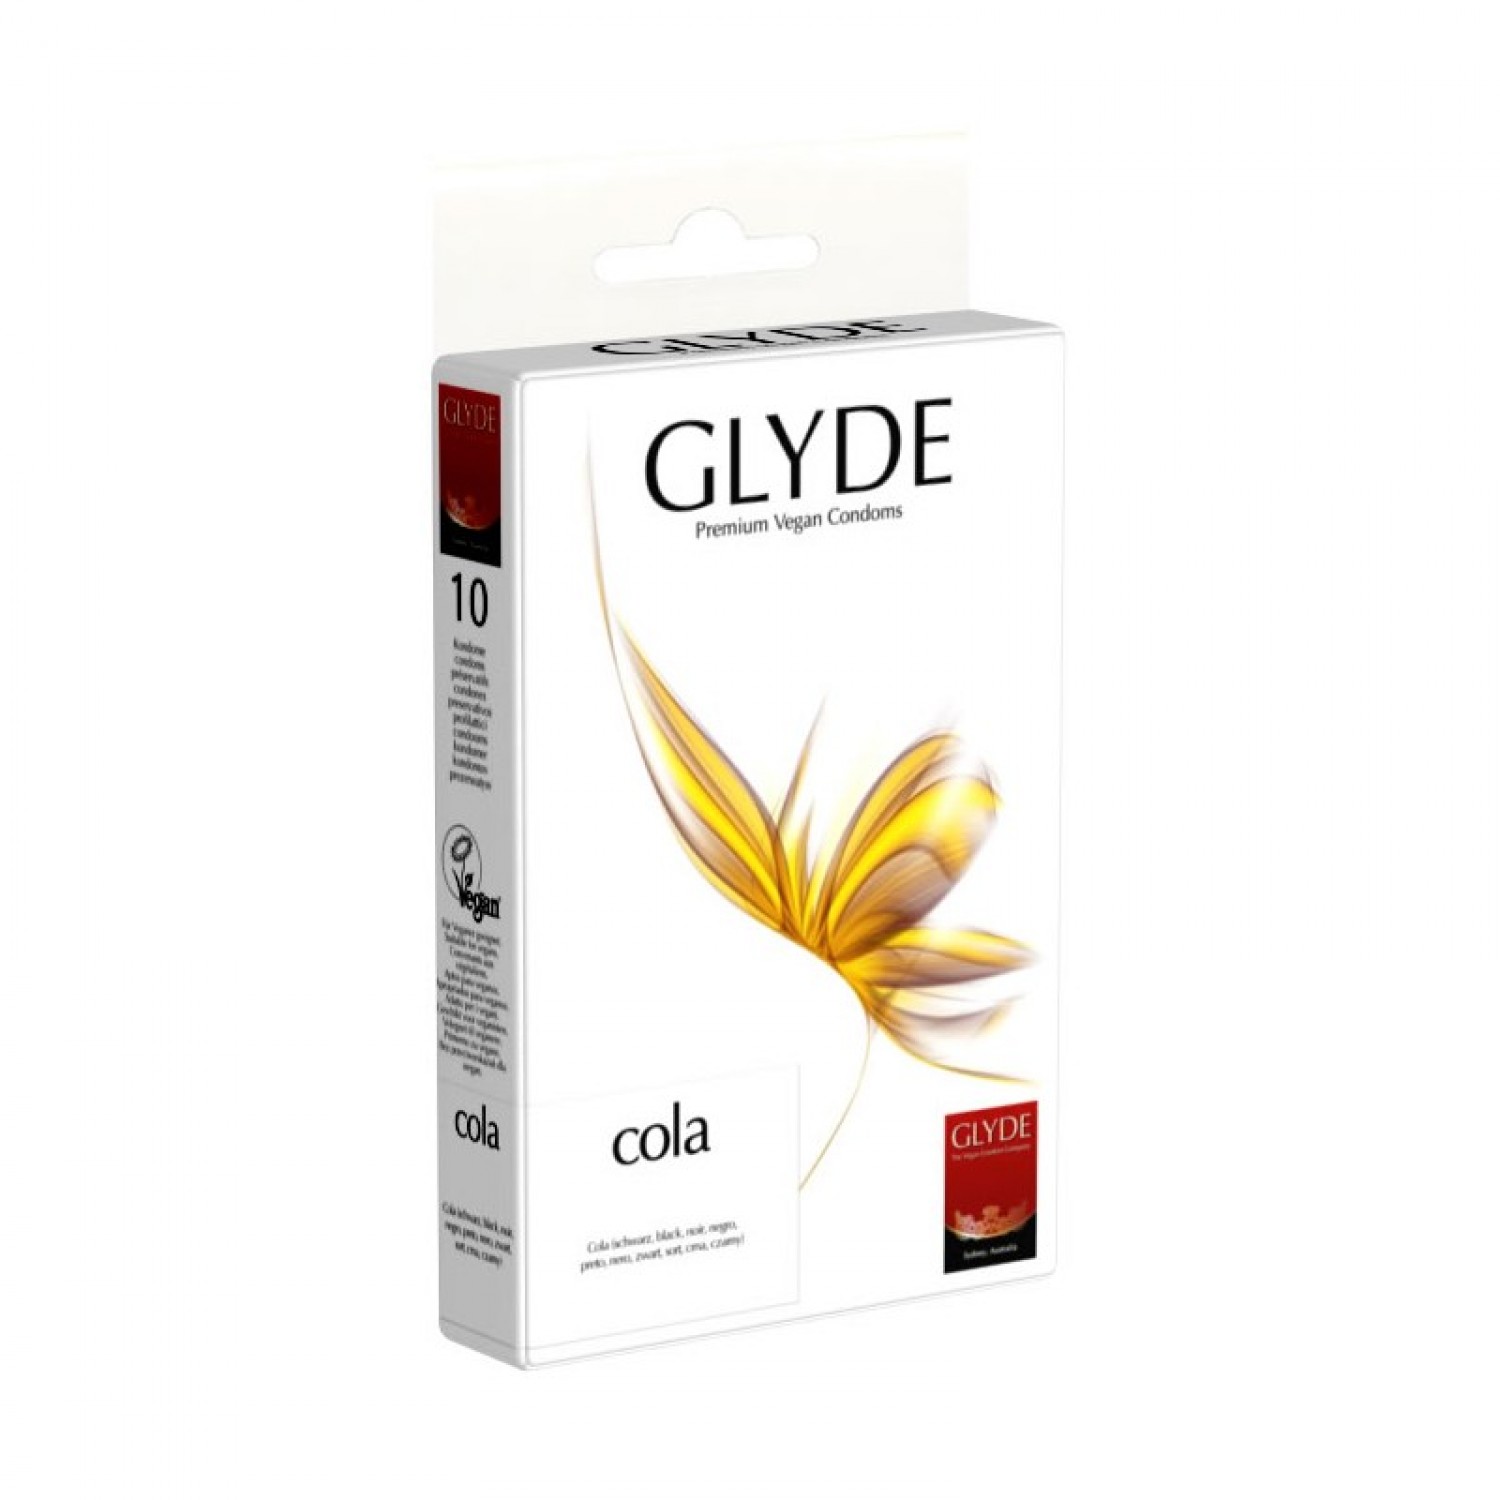 Glyde Vegan Condoms – Cola Flavour